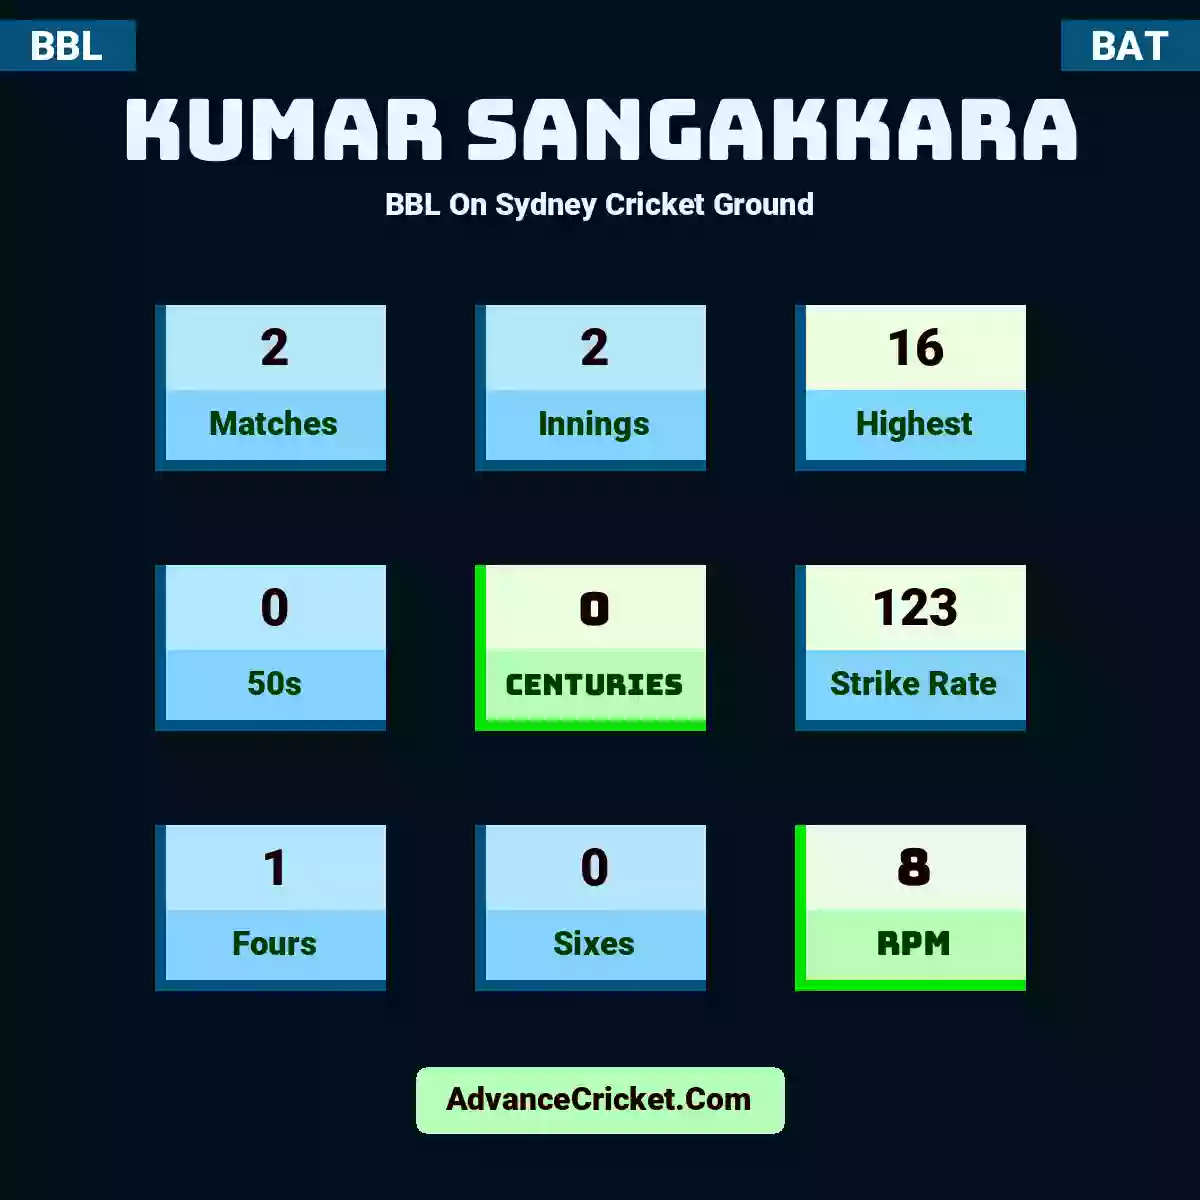 Kumar Sangakkara BBL  On Sydney Cricket Ground, Kumar Sangakkara played 2 matches, scored 16 runs as highest, 0 half-centuries, and 0 centuries, with a strike rate of 123. K.Sangakkara hit 1 fours and 0 sixes, with an RPM of 8.